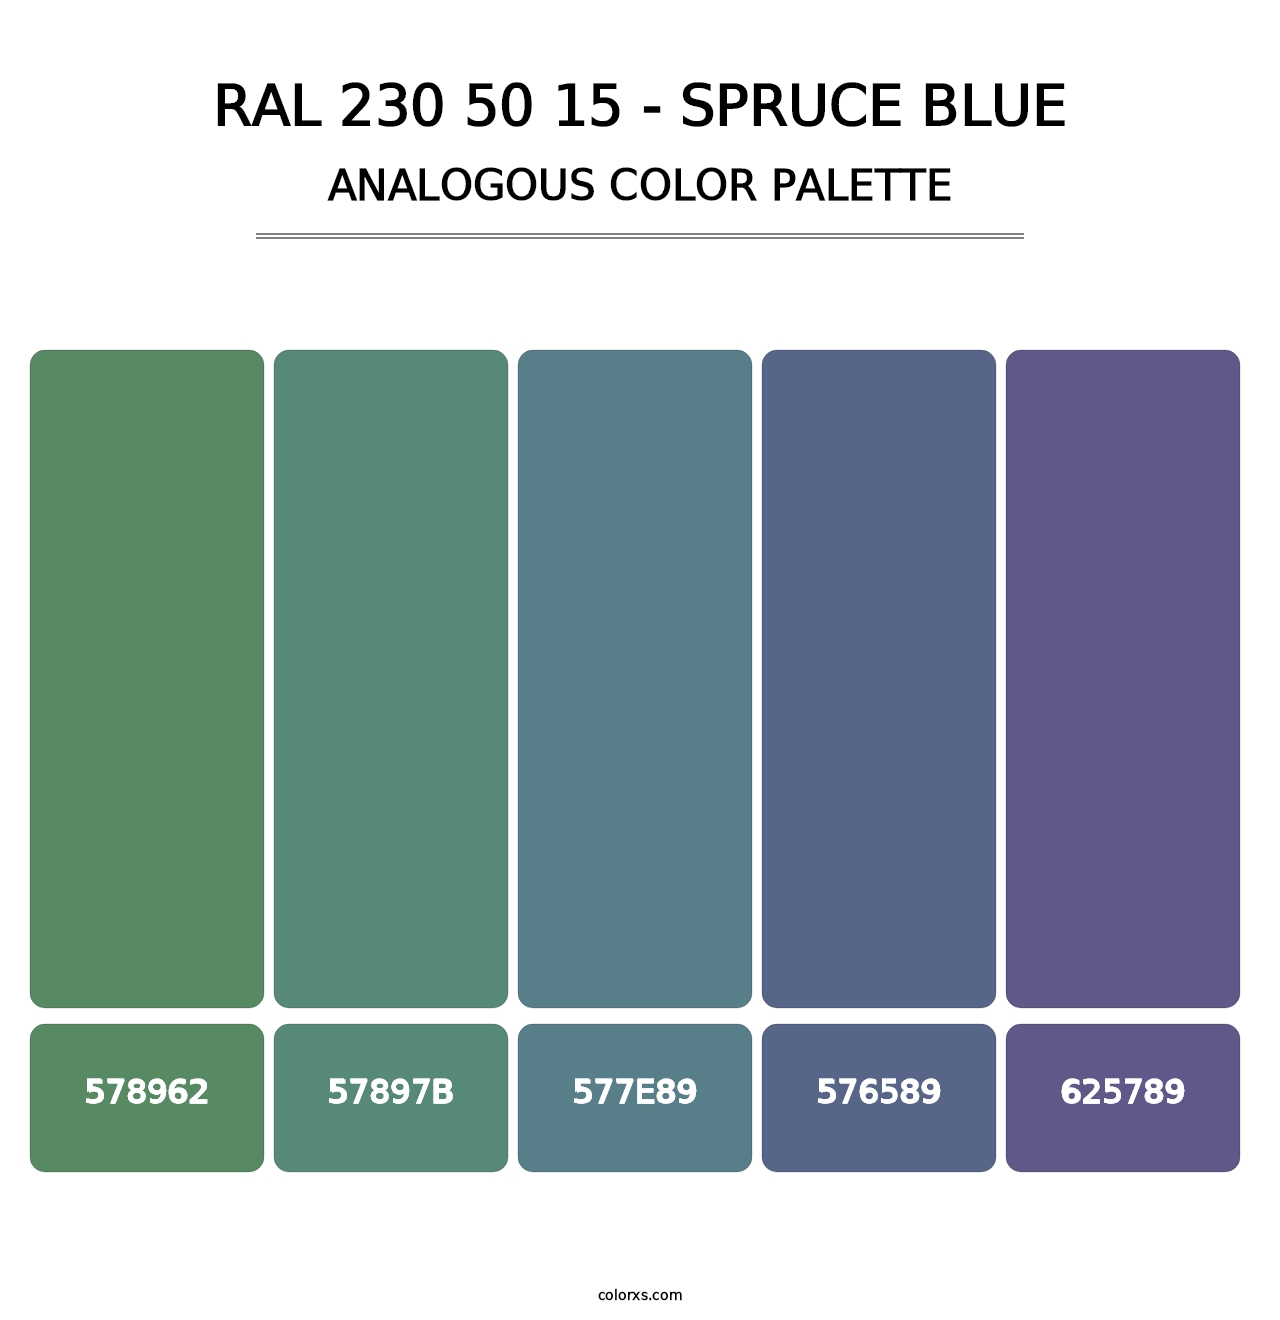 RAL 230 50 15 - Spruce Blue - Analogous Color Palette